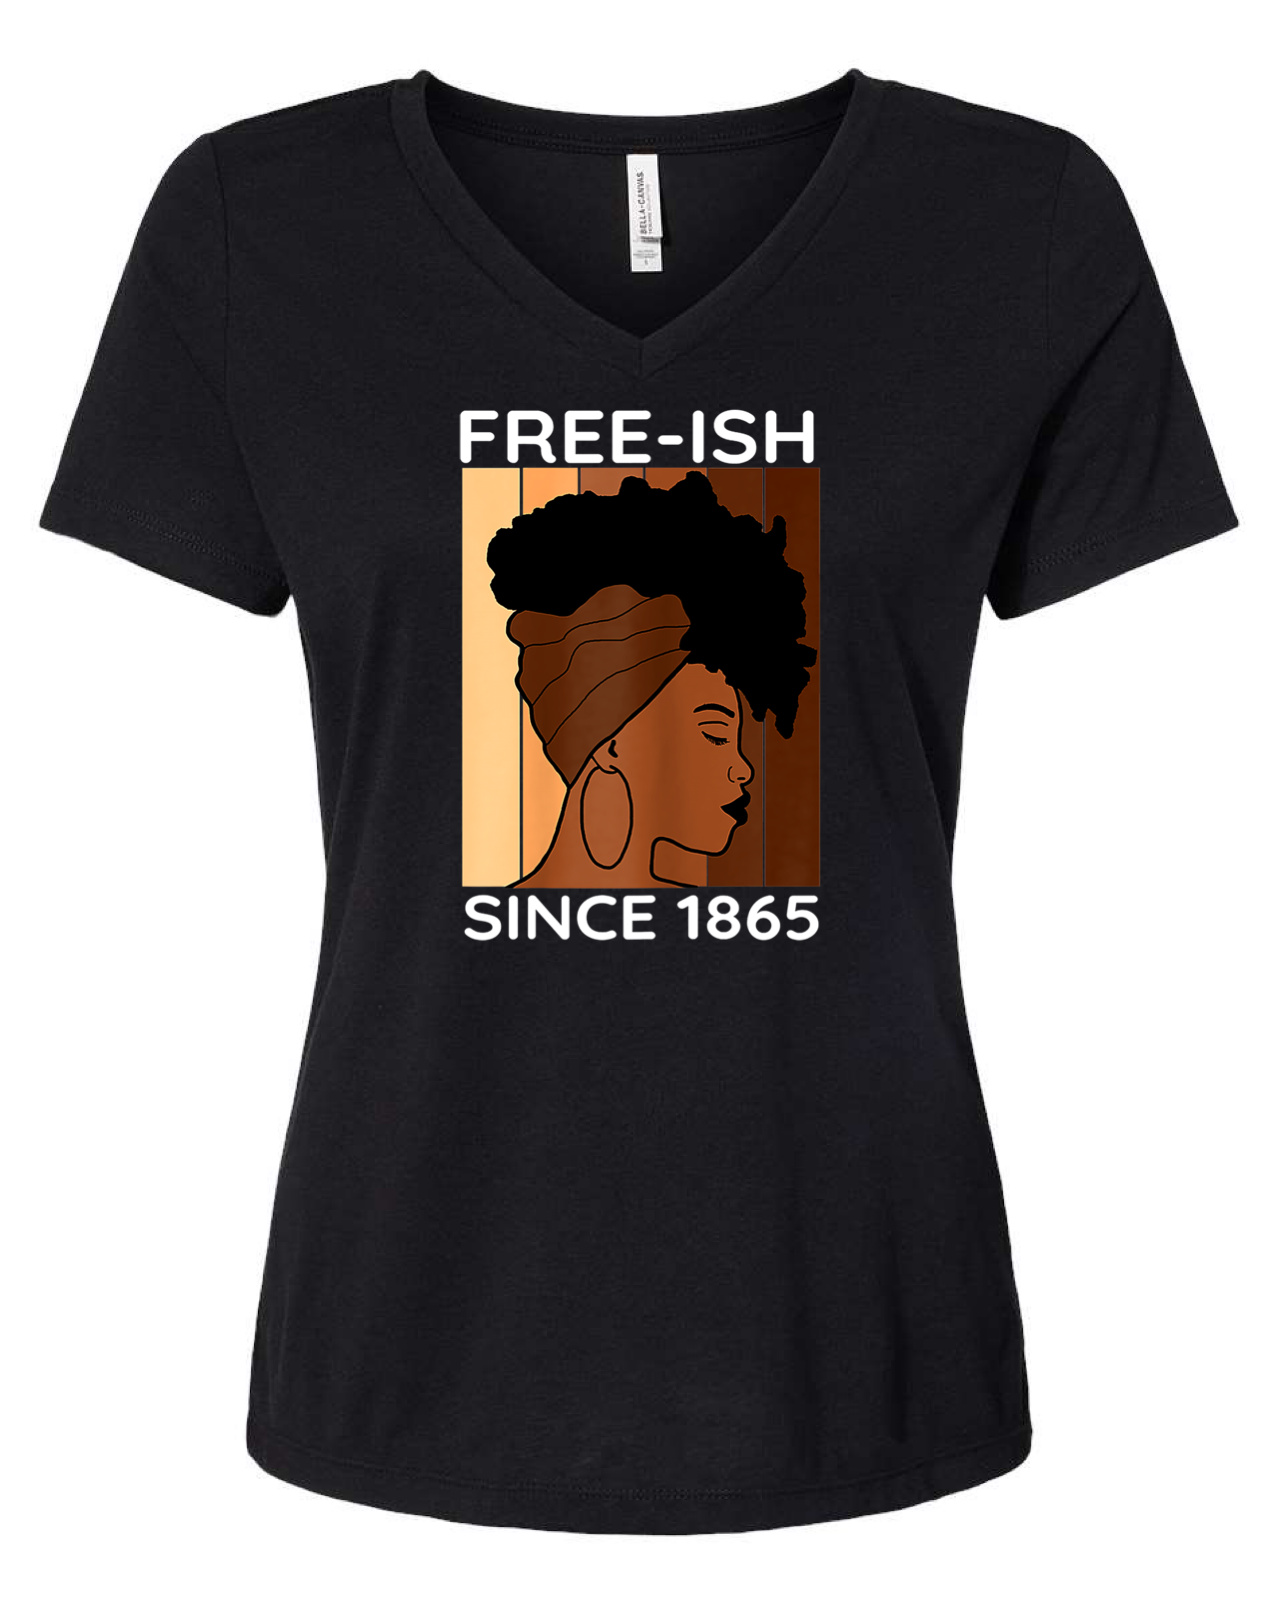 Juneteenth t-shirt for women - Free - ish